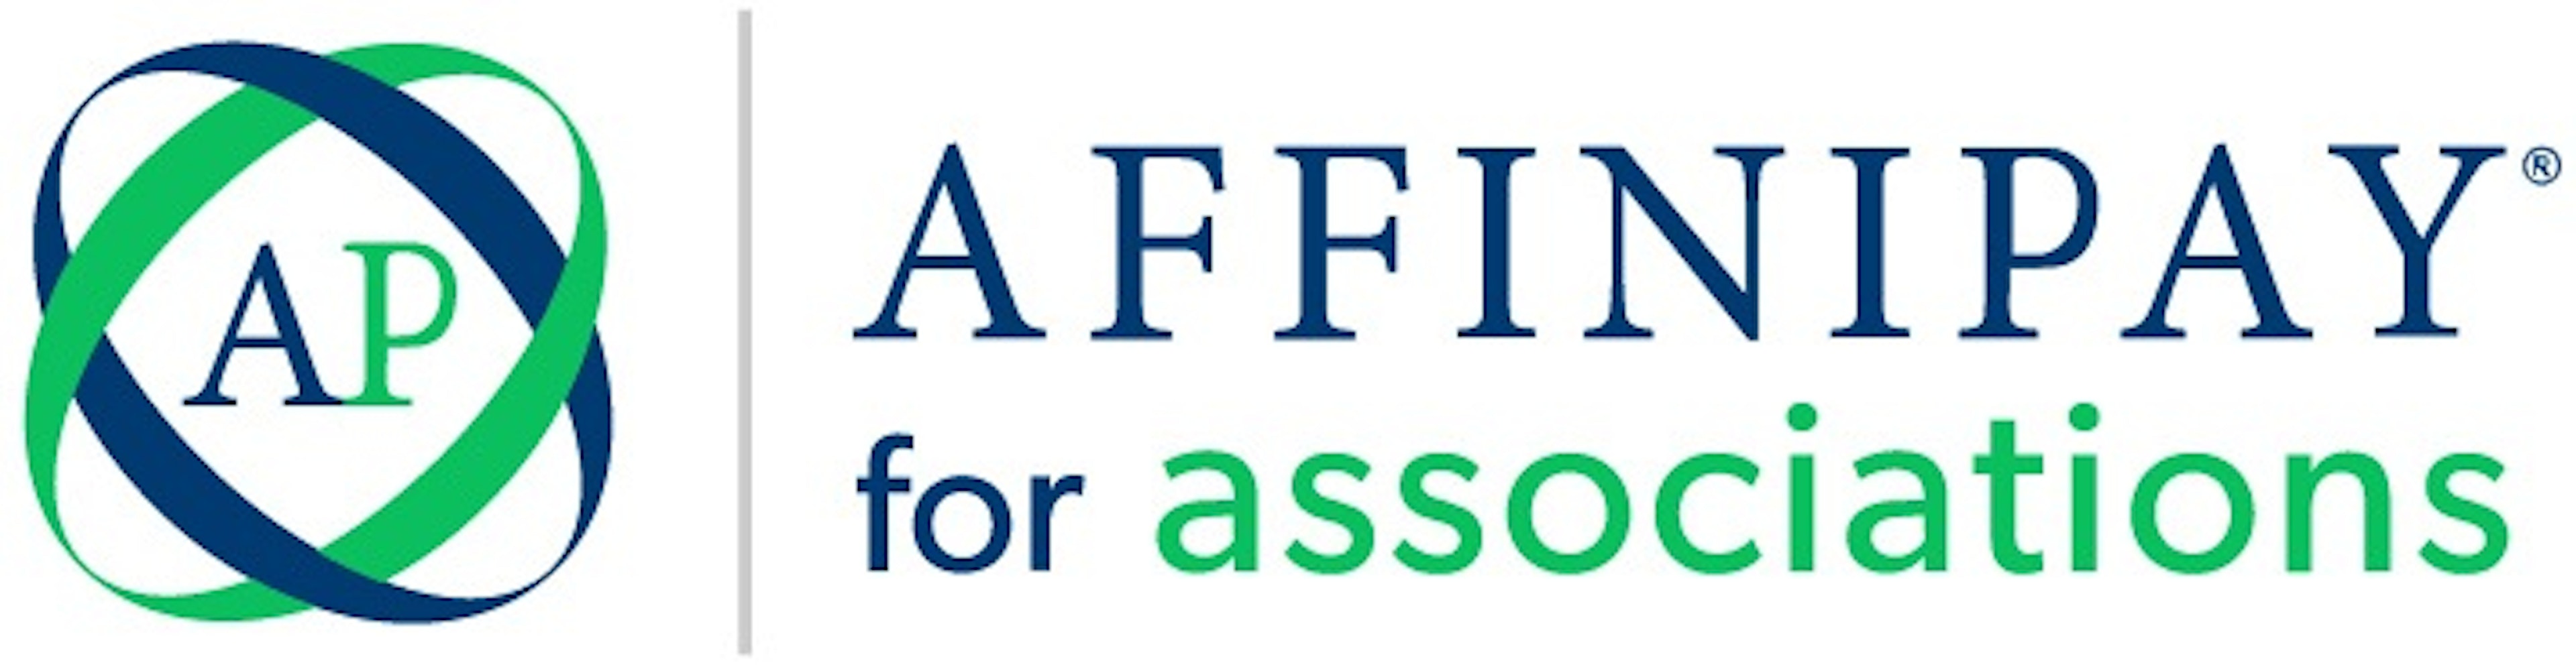 AffiniPay Logo